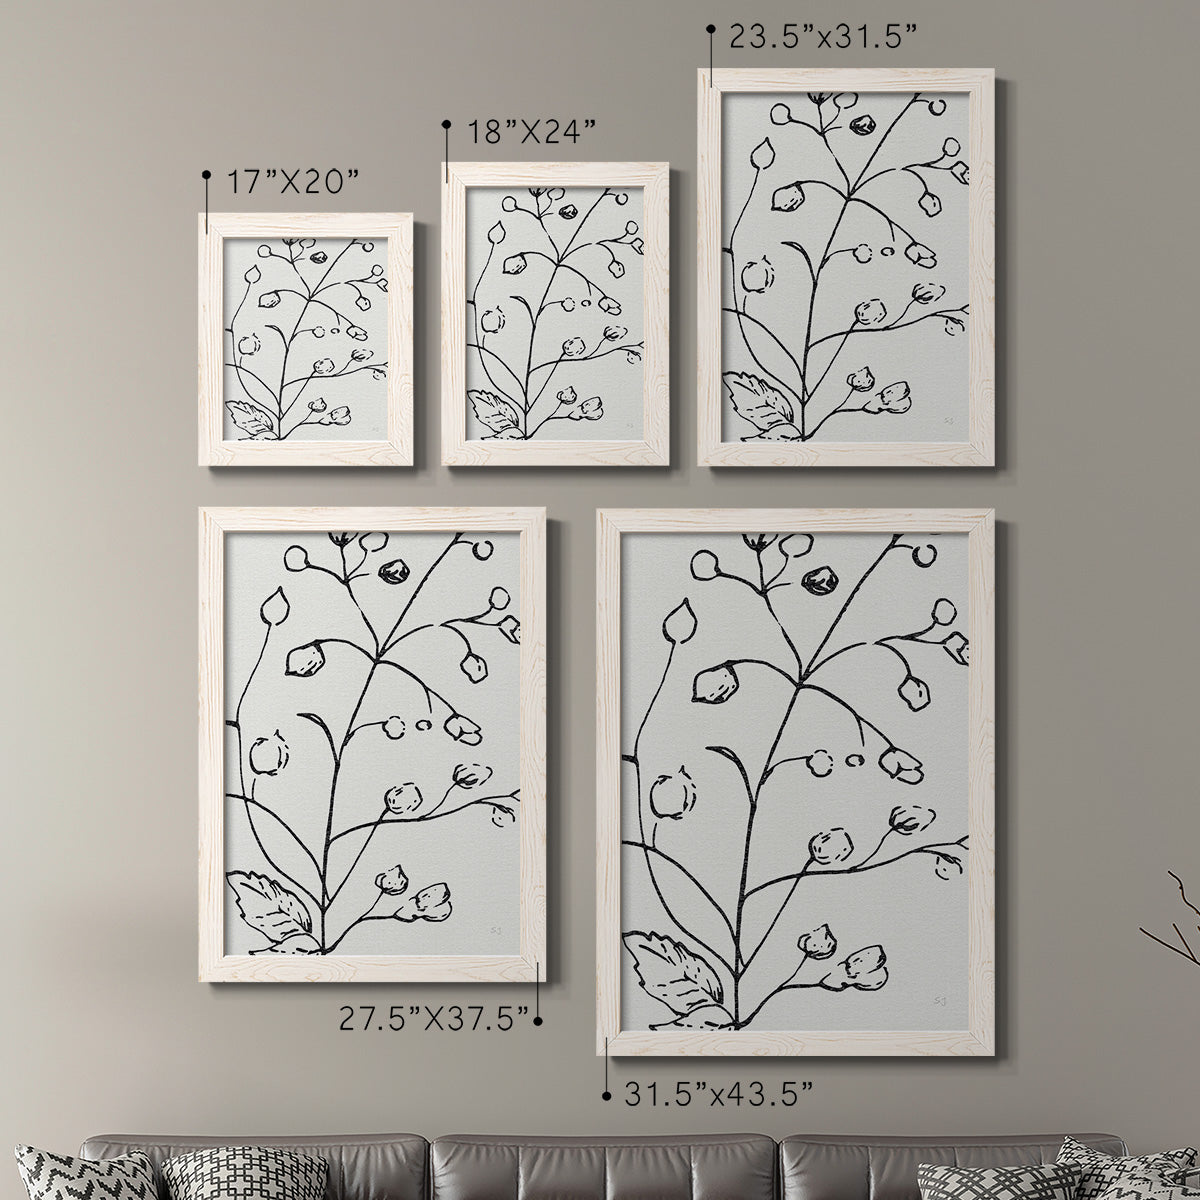 Botanical Sketch I   - Premium Framed Canvas 2 Piece Set - Ready to Hang